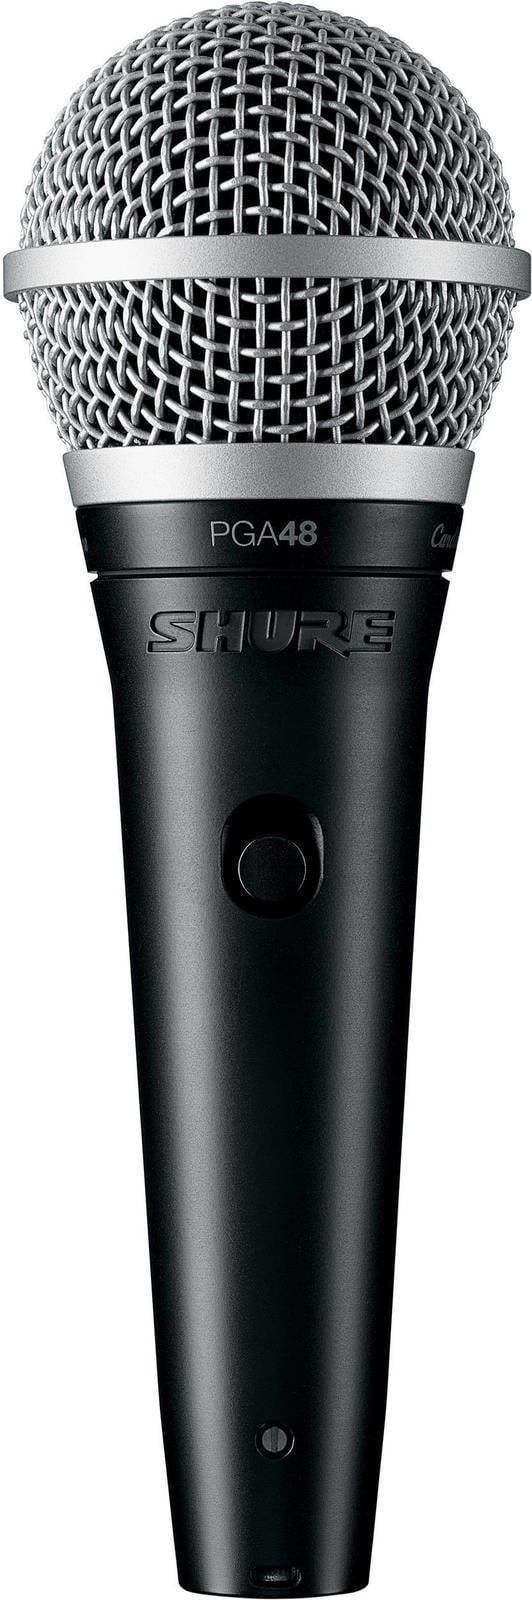 Vocal Dynamic Microphone Shure PGA48-XLR-E Vocal Dynamic Microphone